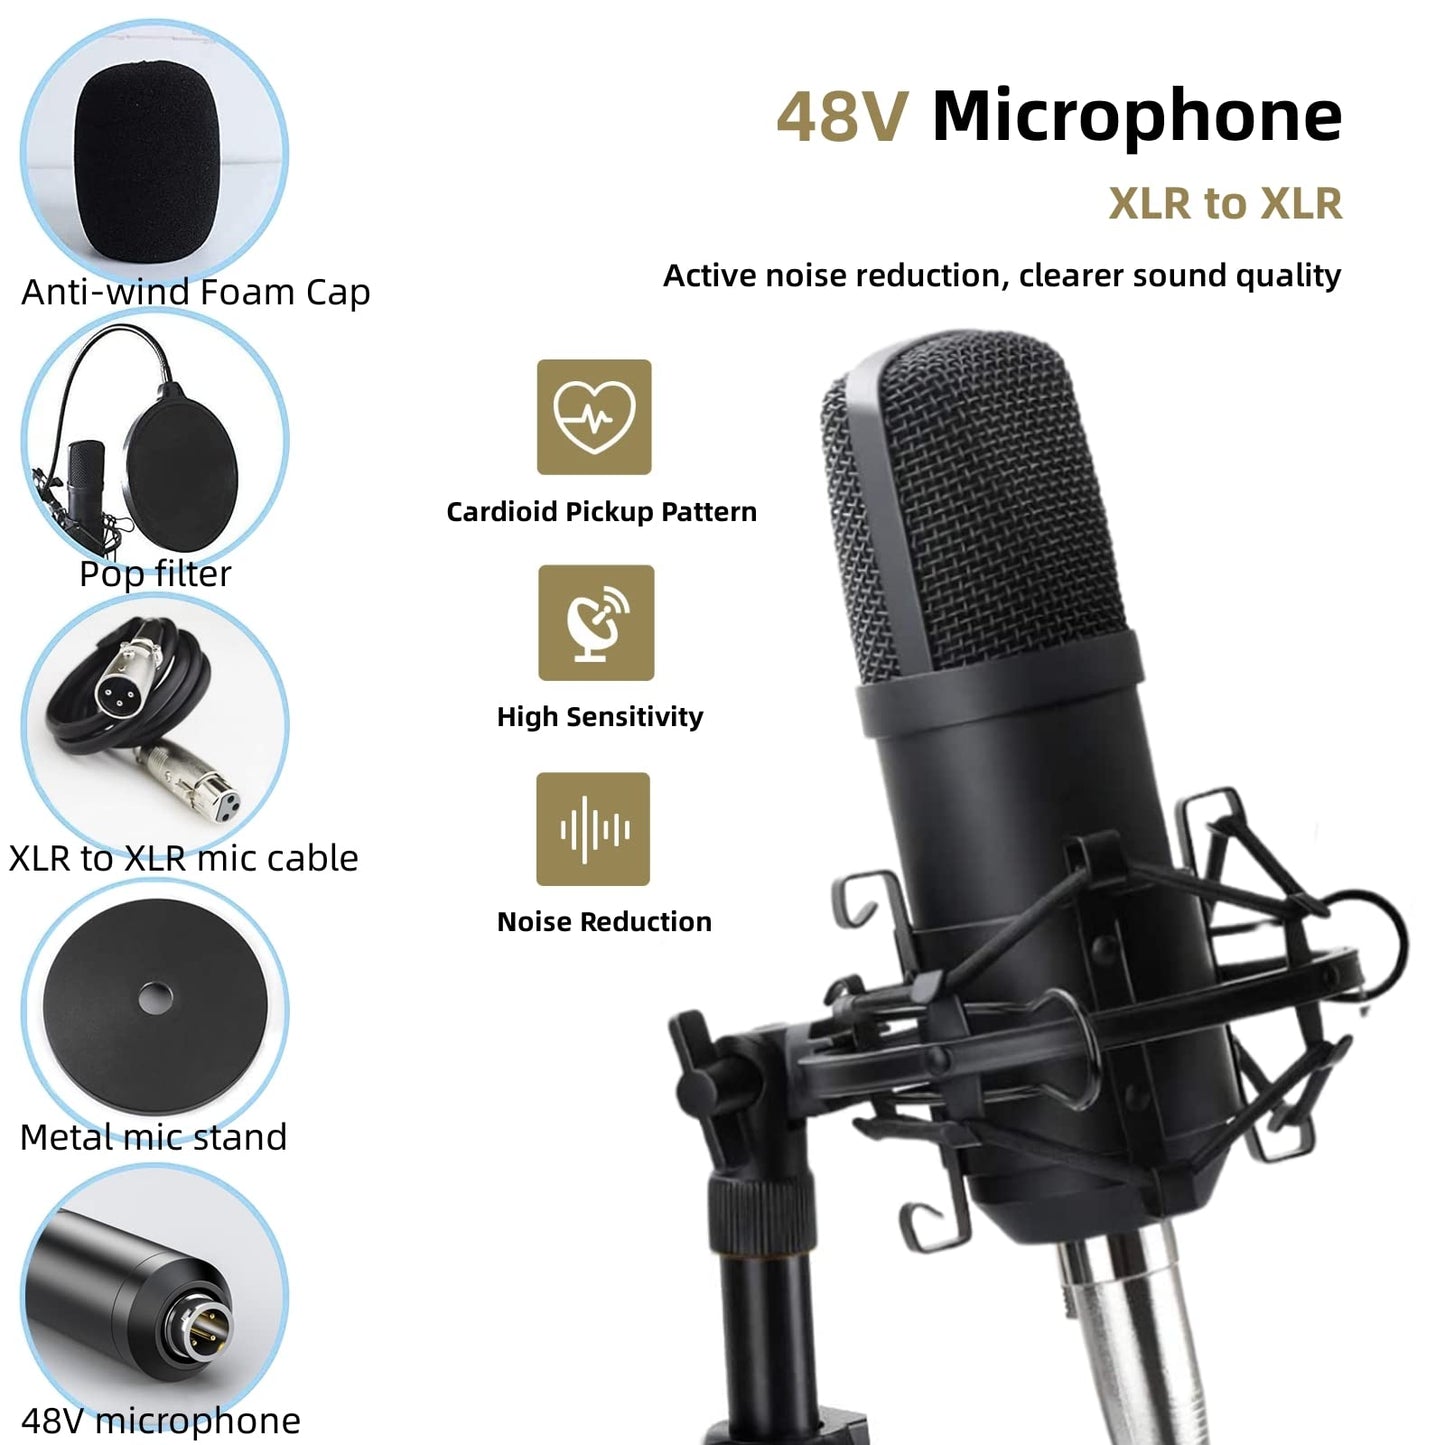 sktome M300-ZM01 XLR Microphone Bundle, 48V, Adjustable Stand, Dual DSP Noise Reduction, 4 Voice Changers, RGB Lighting, 12 Month Warranty